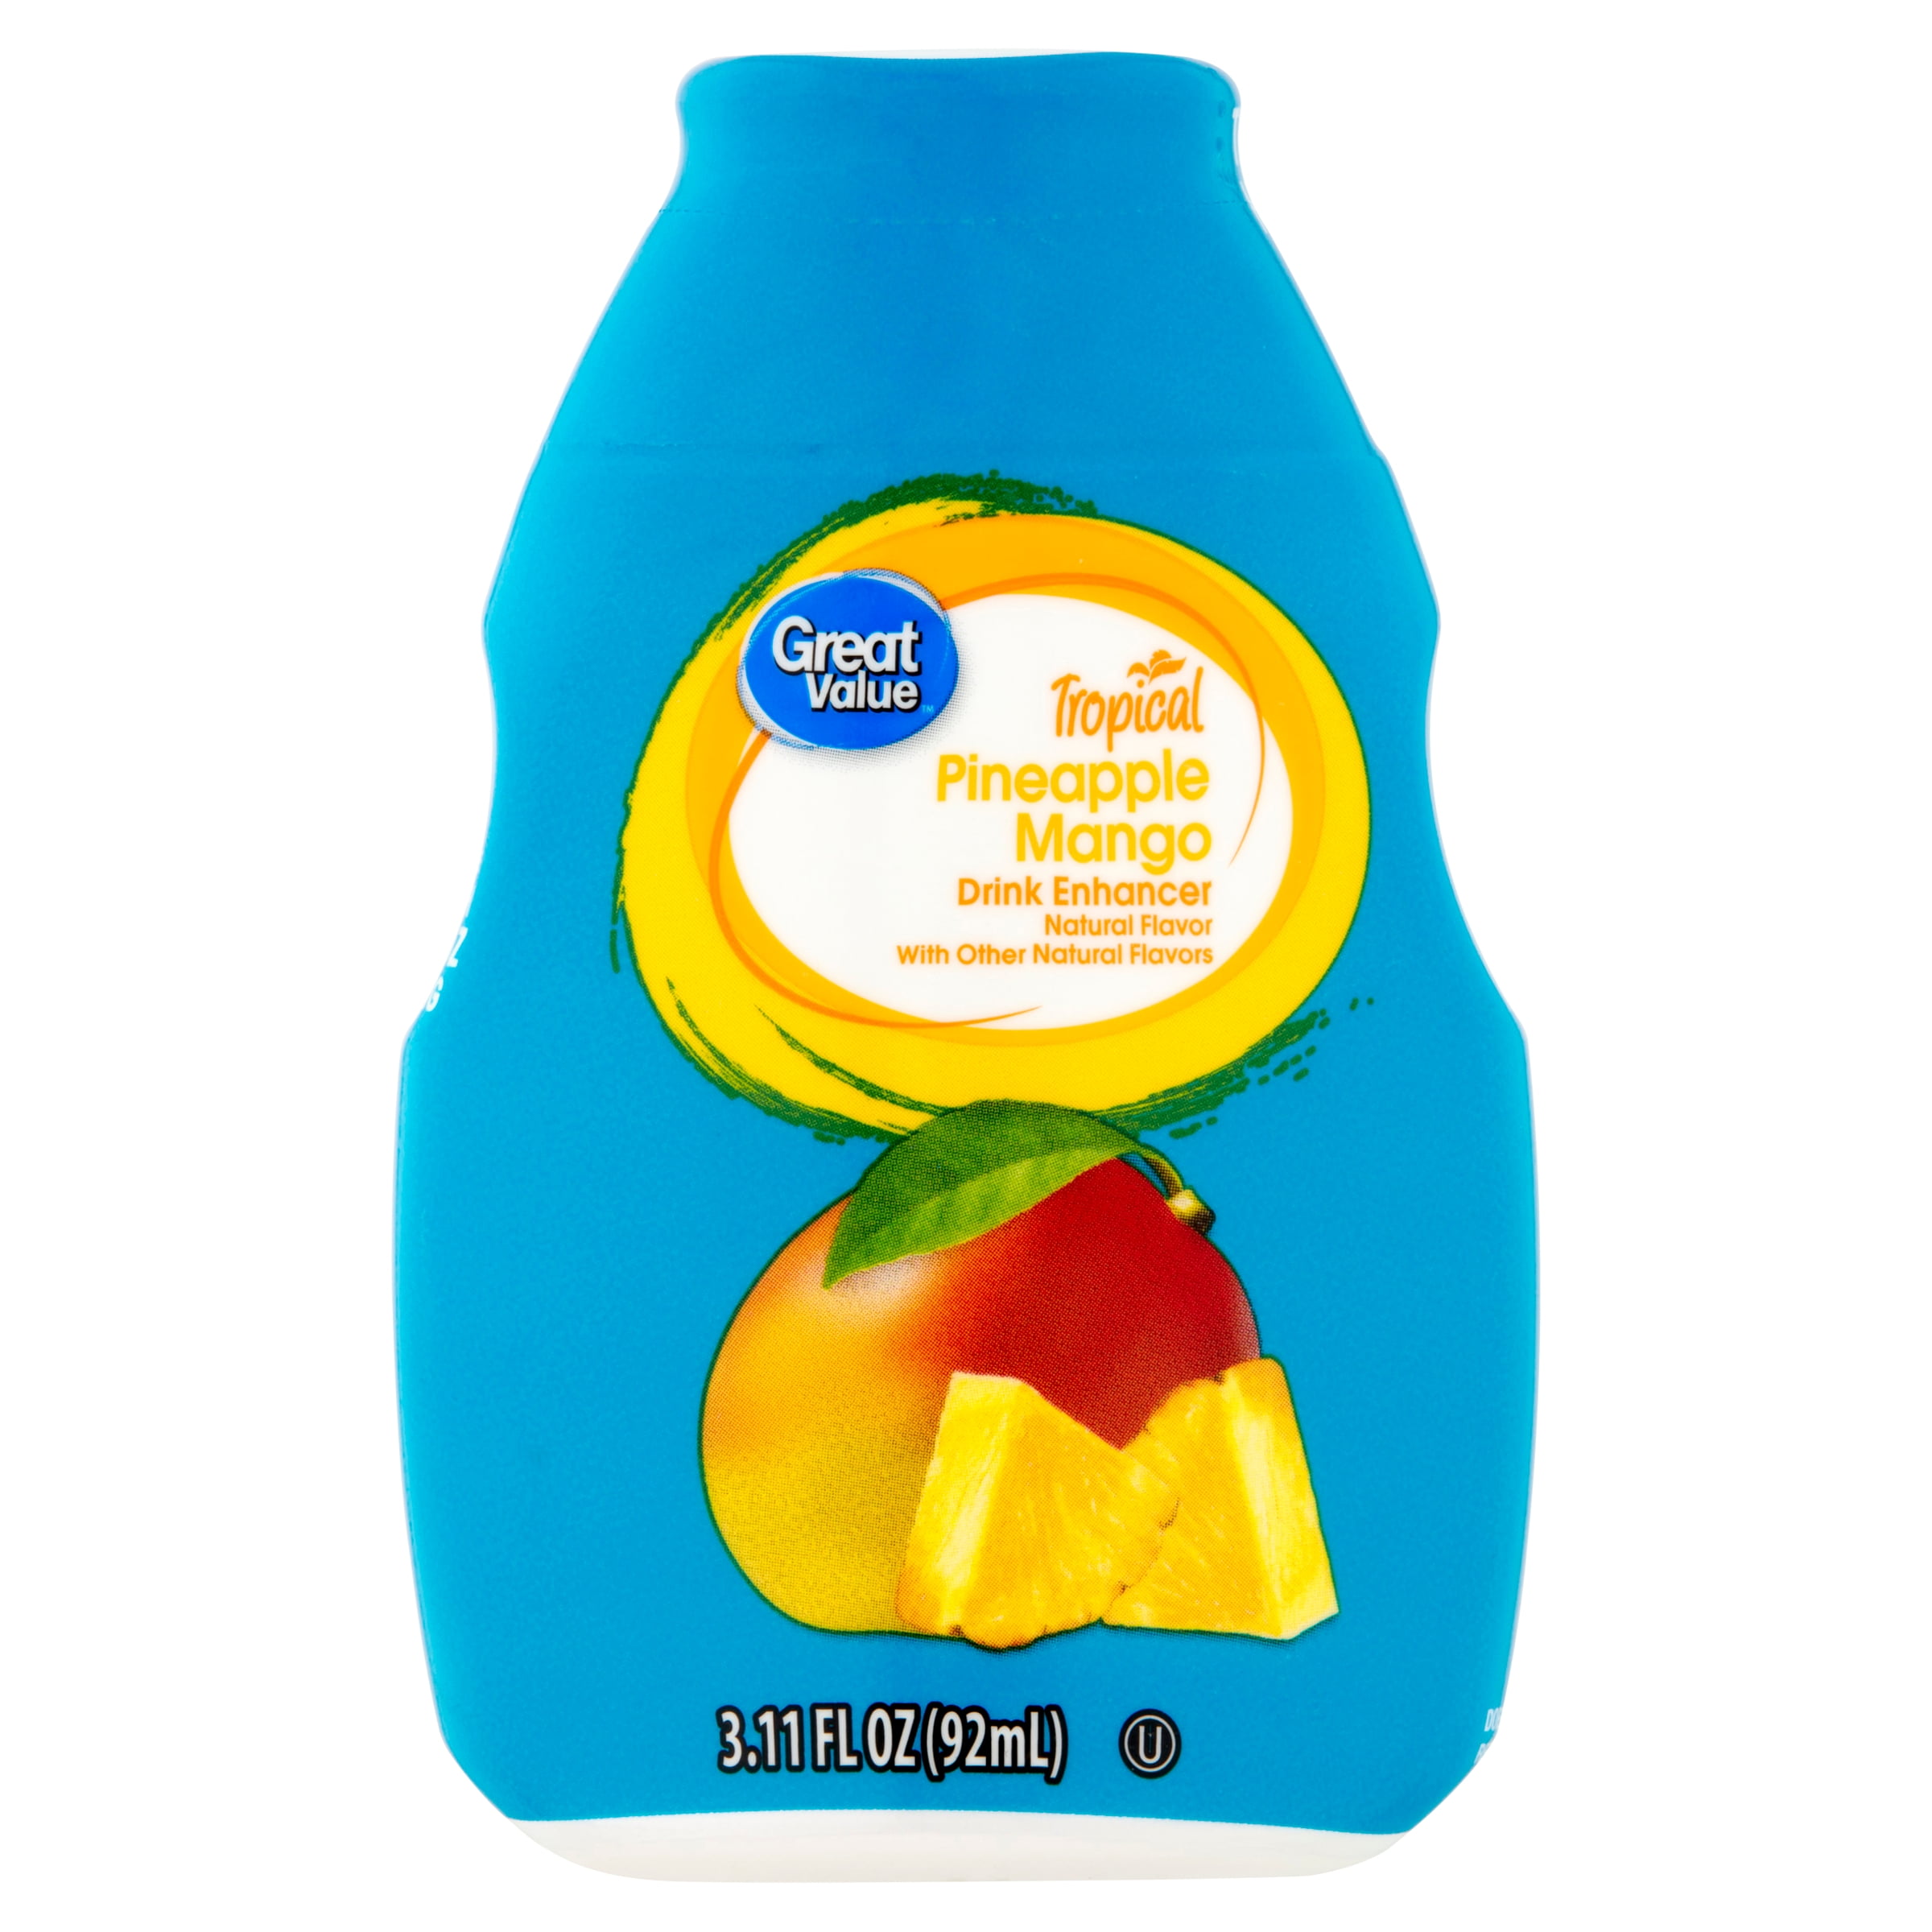 Great Value Tropical Pineapple Mango Drink Enhancer, 3.11 fl oz